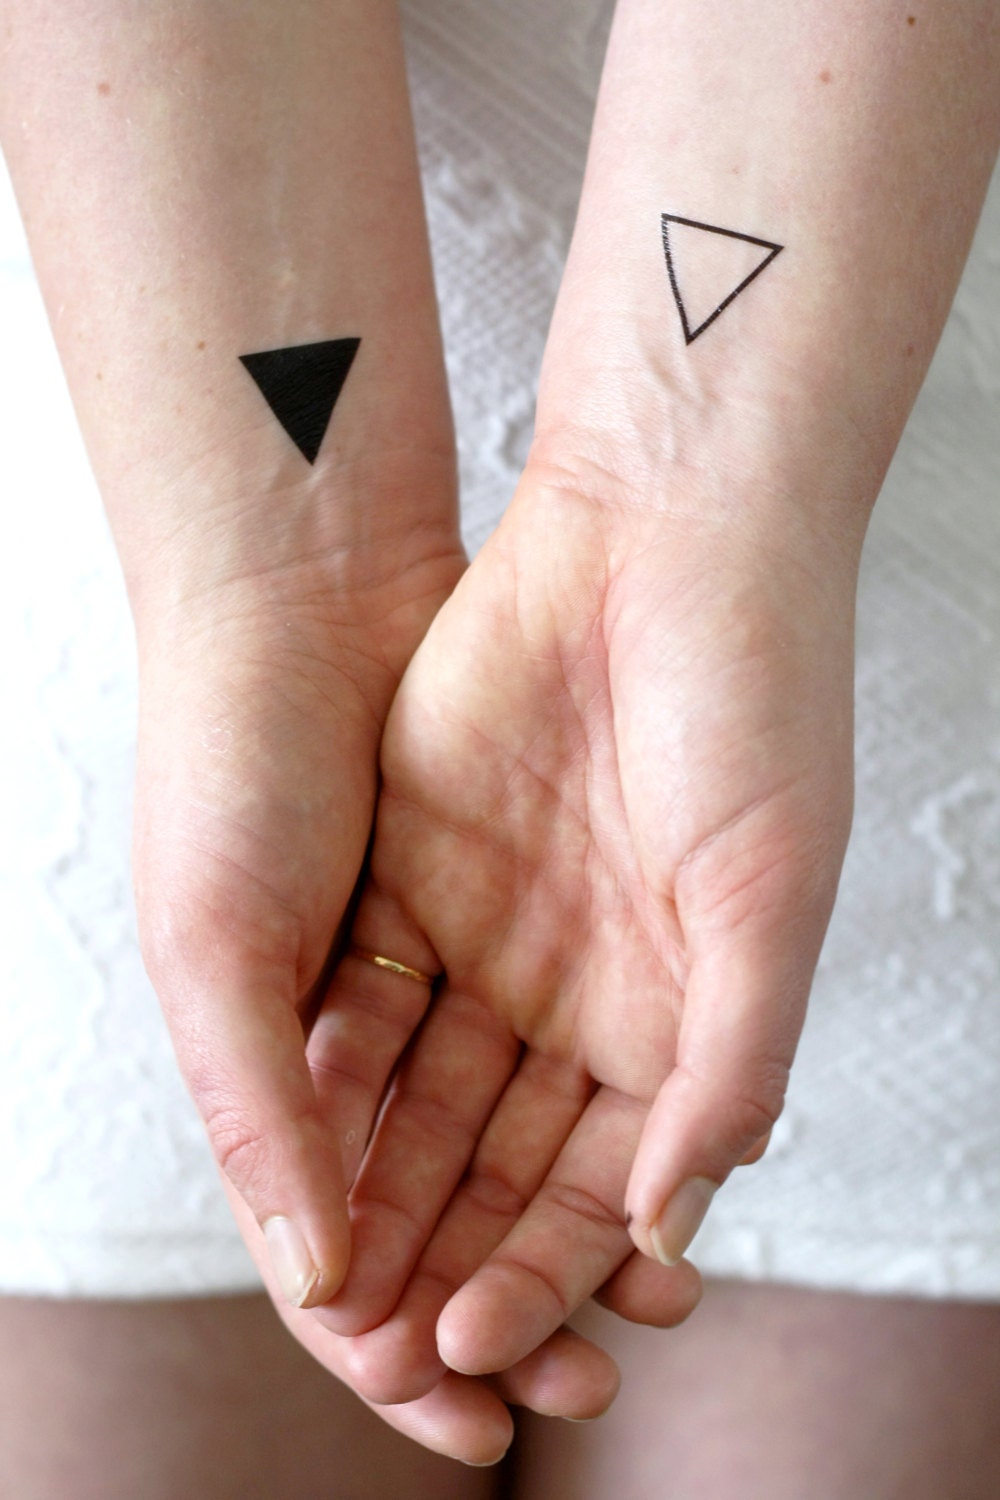 Triangle tattoo on hand | Hand tattoos, Tattoos for guys, Small hand tattoos